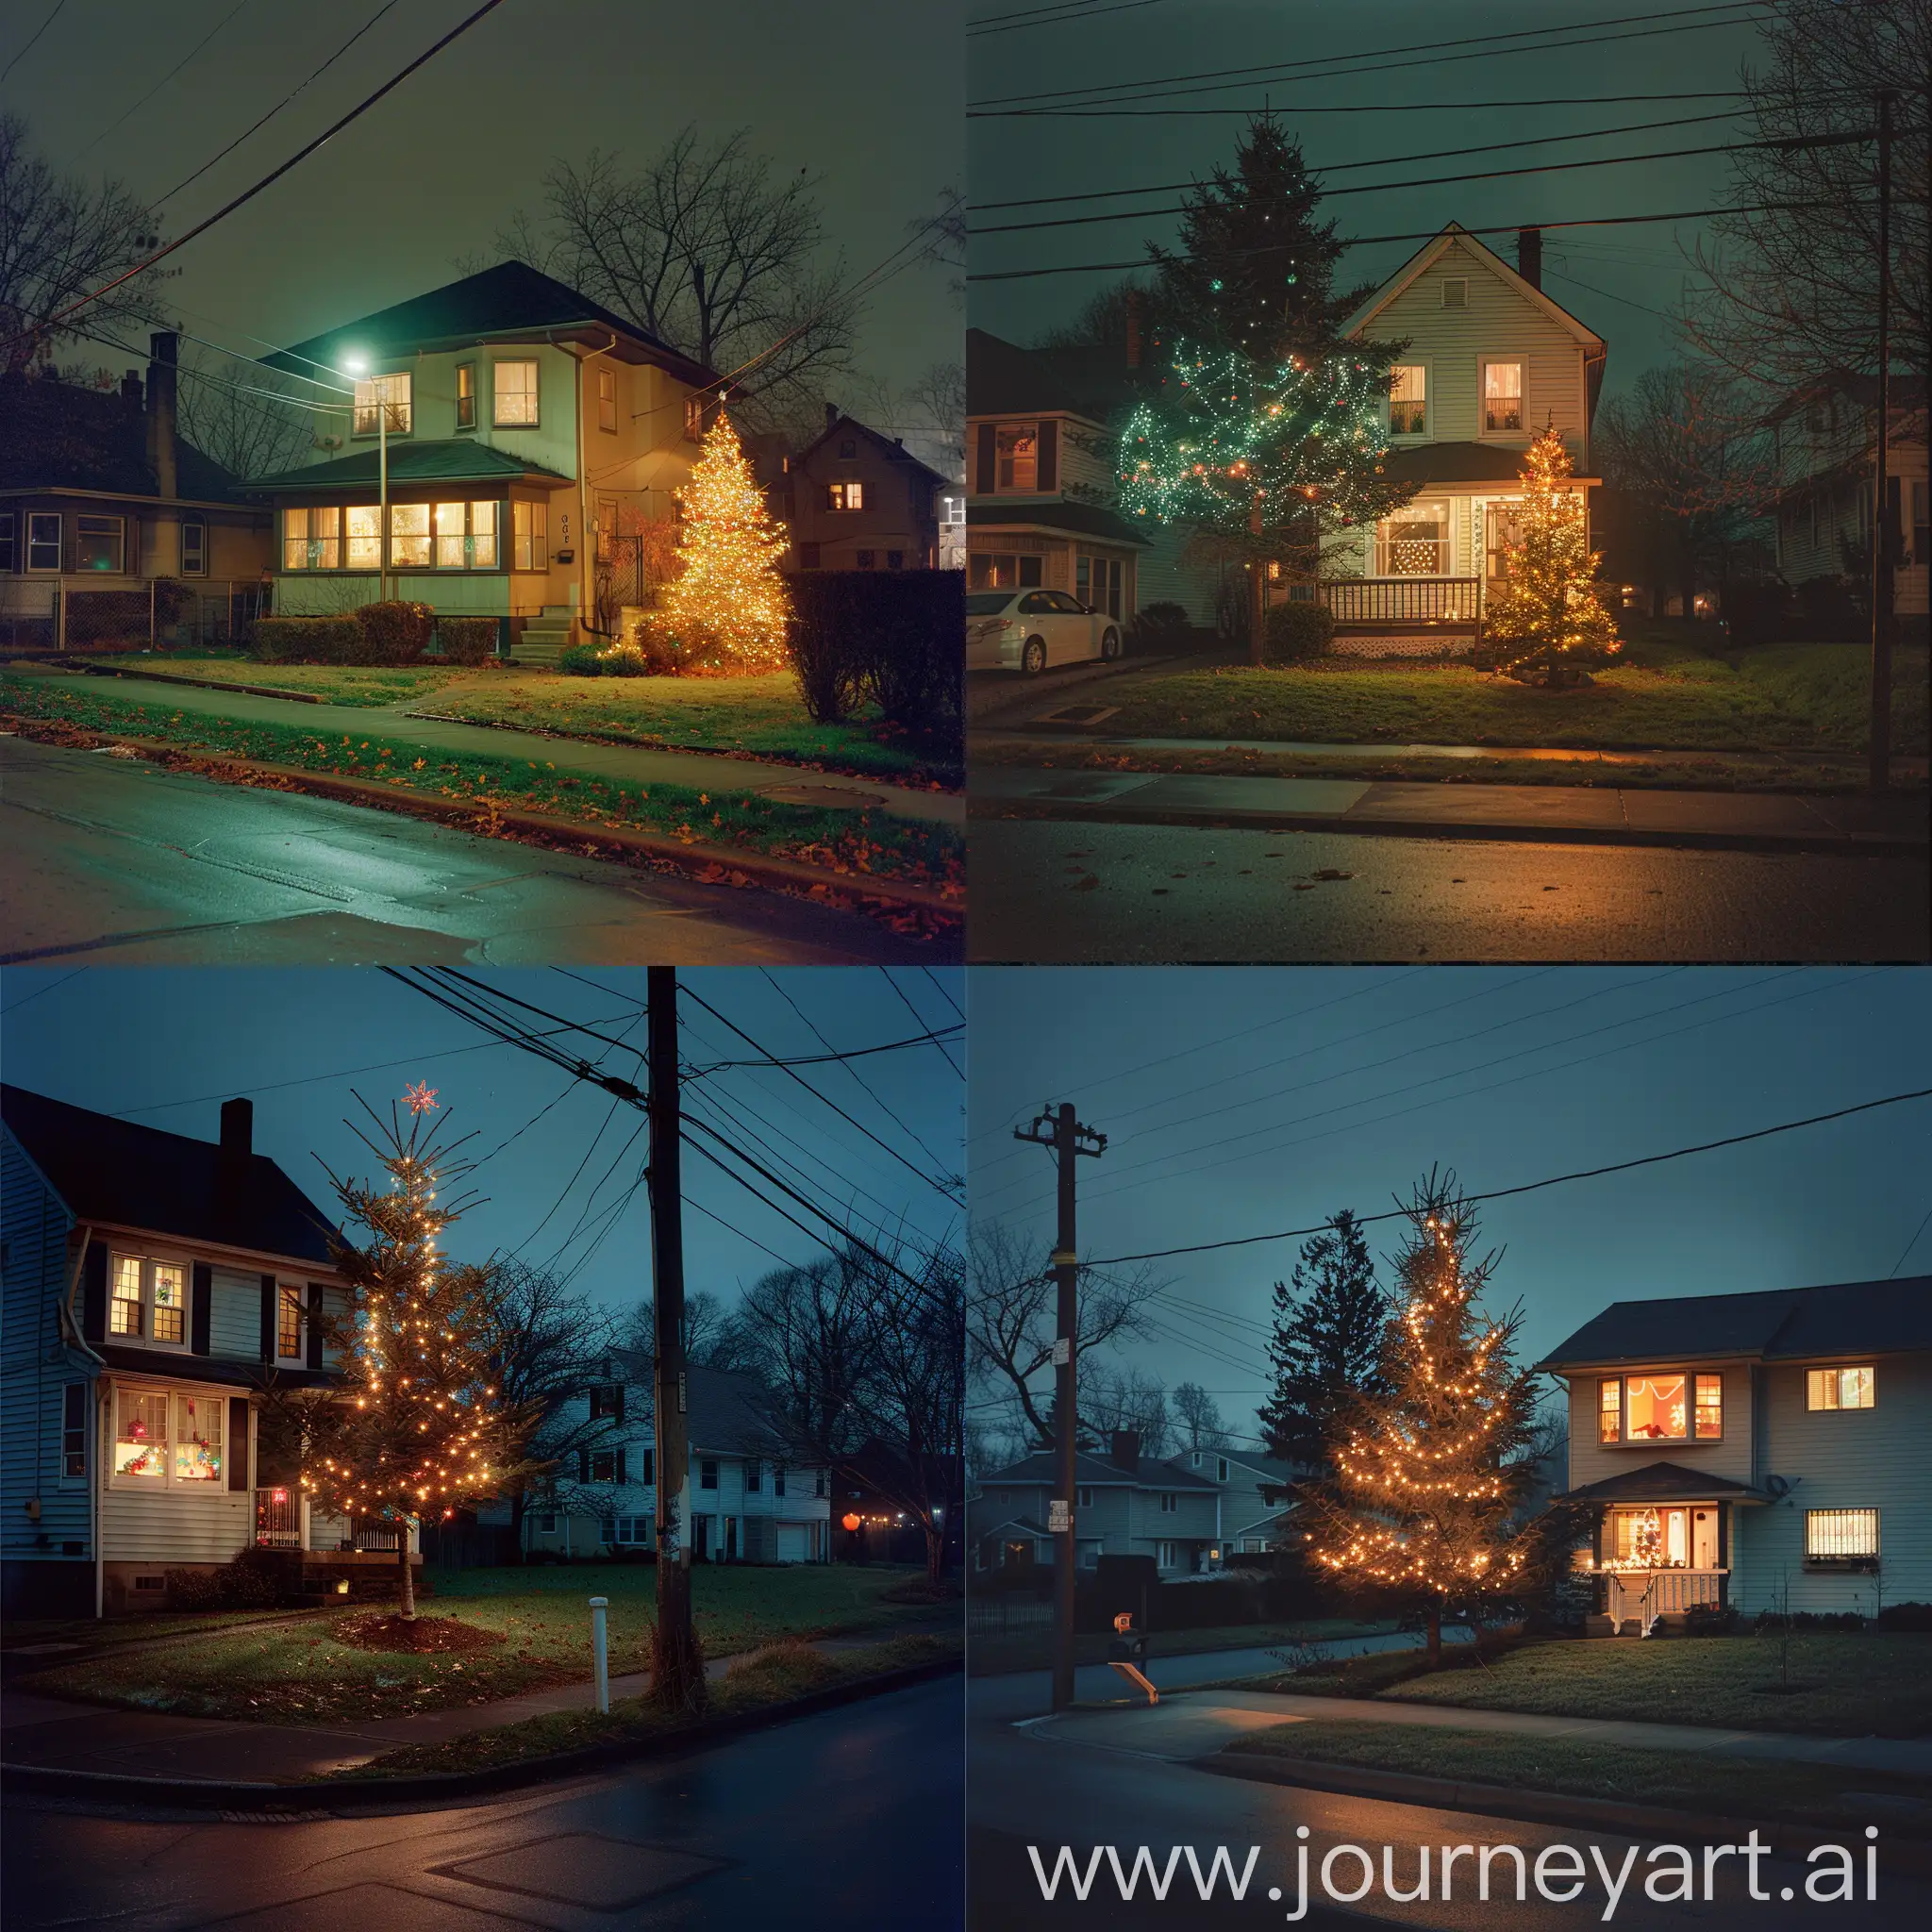 Christmas-Night-in-Residential-Neighborhood-Illuminated-House-and-Tree